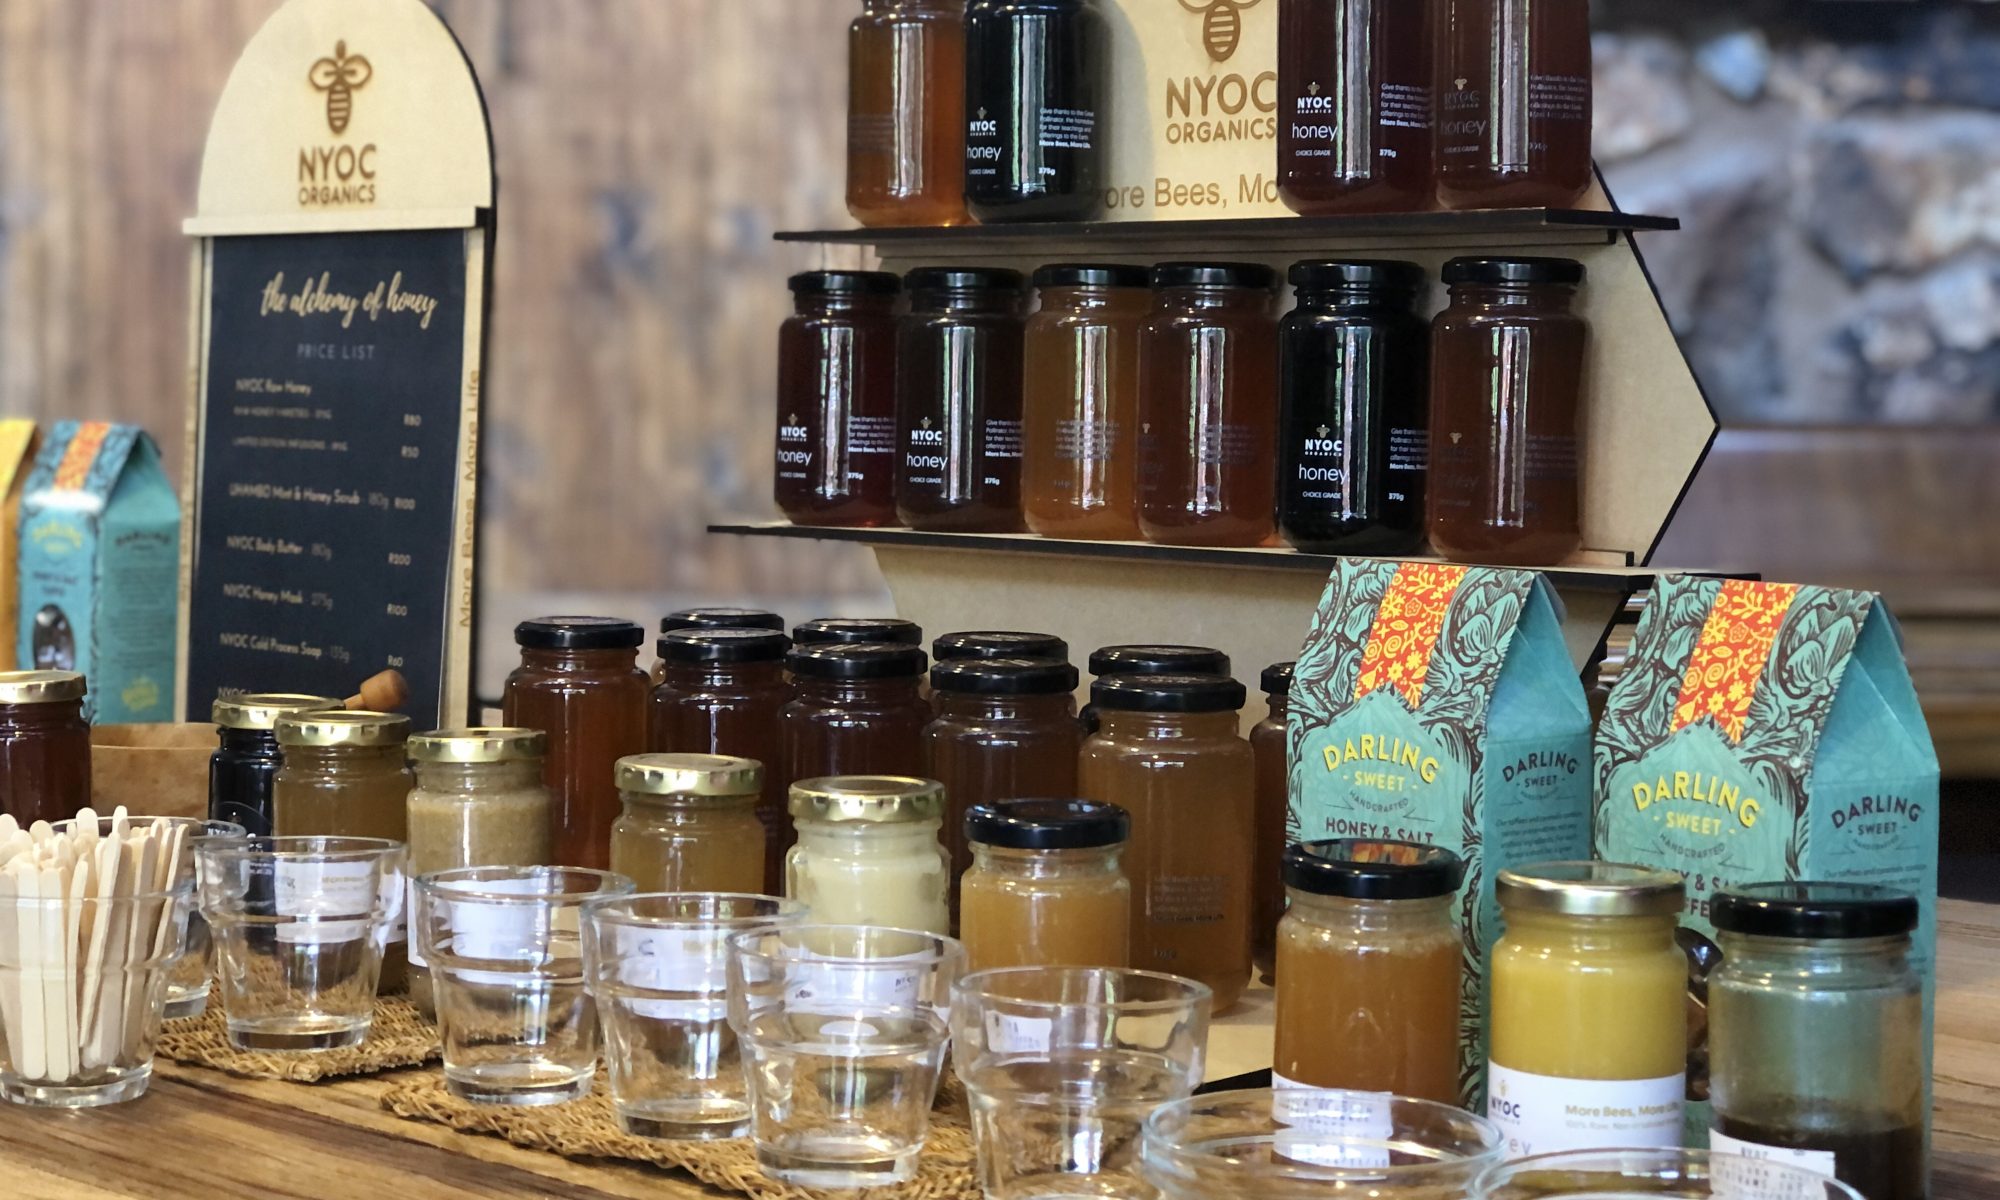 NYOC honey display